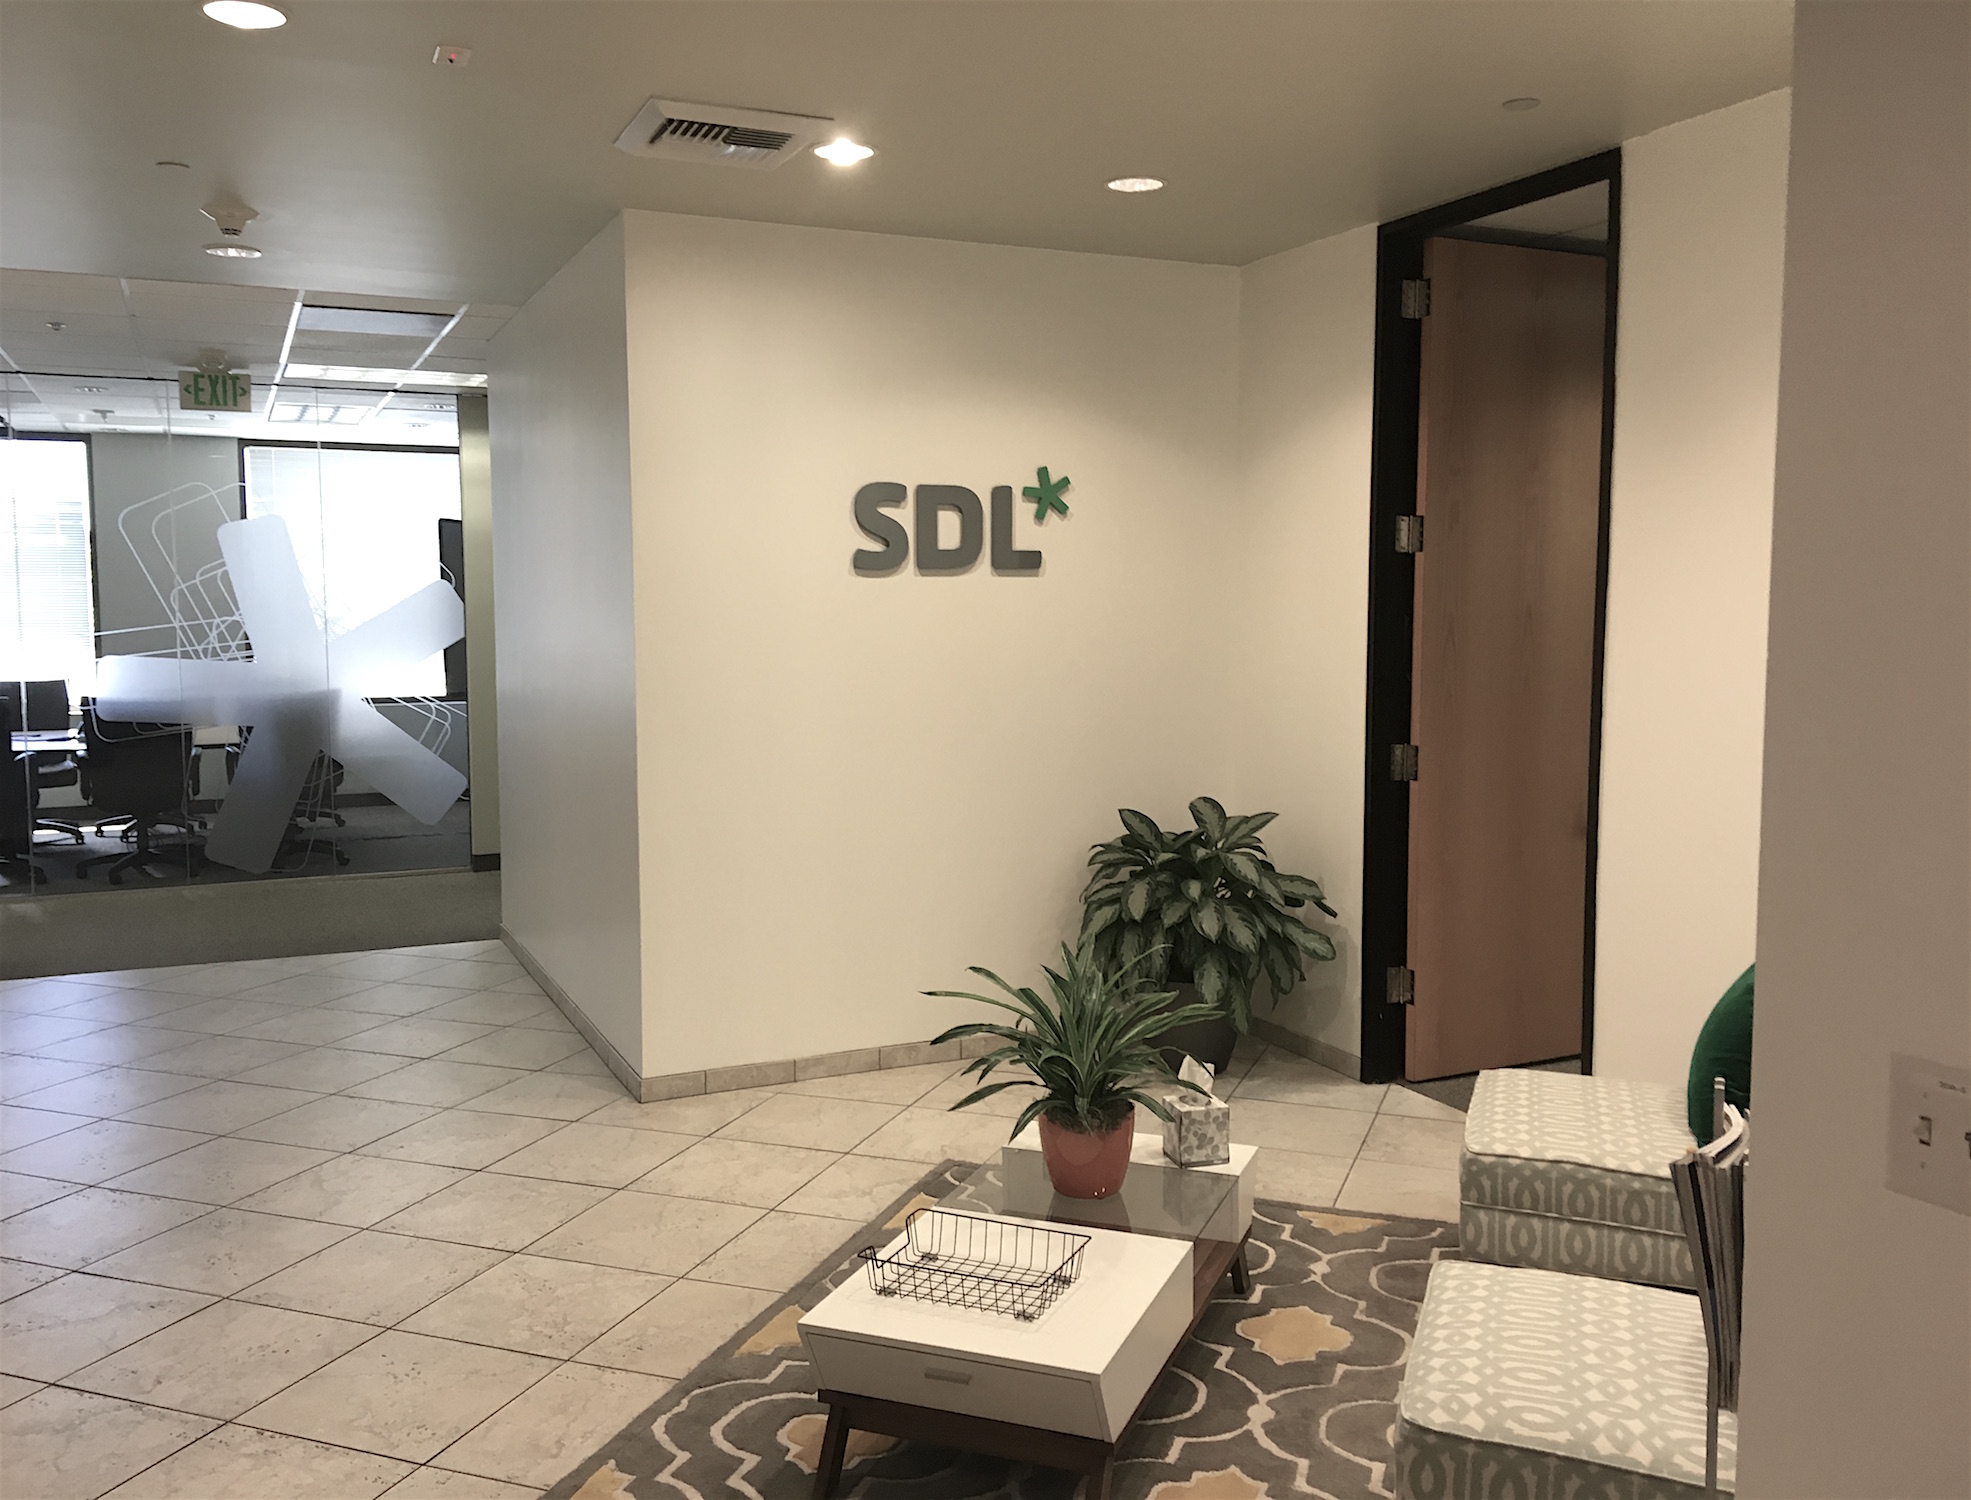 SDL – San Jose, CA